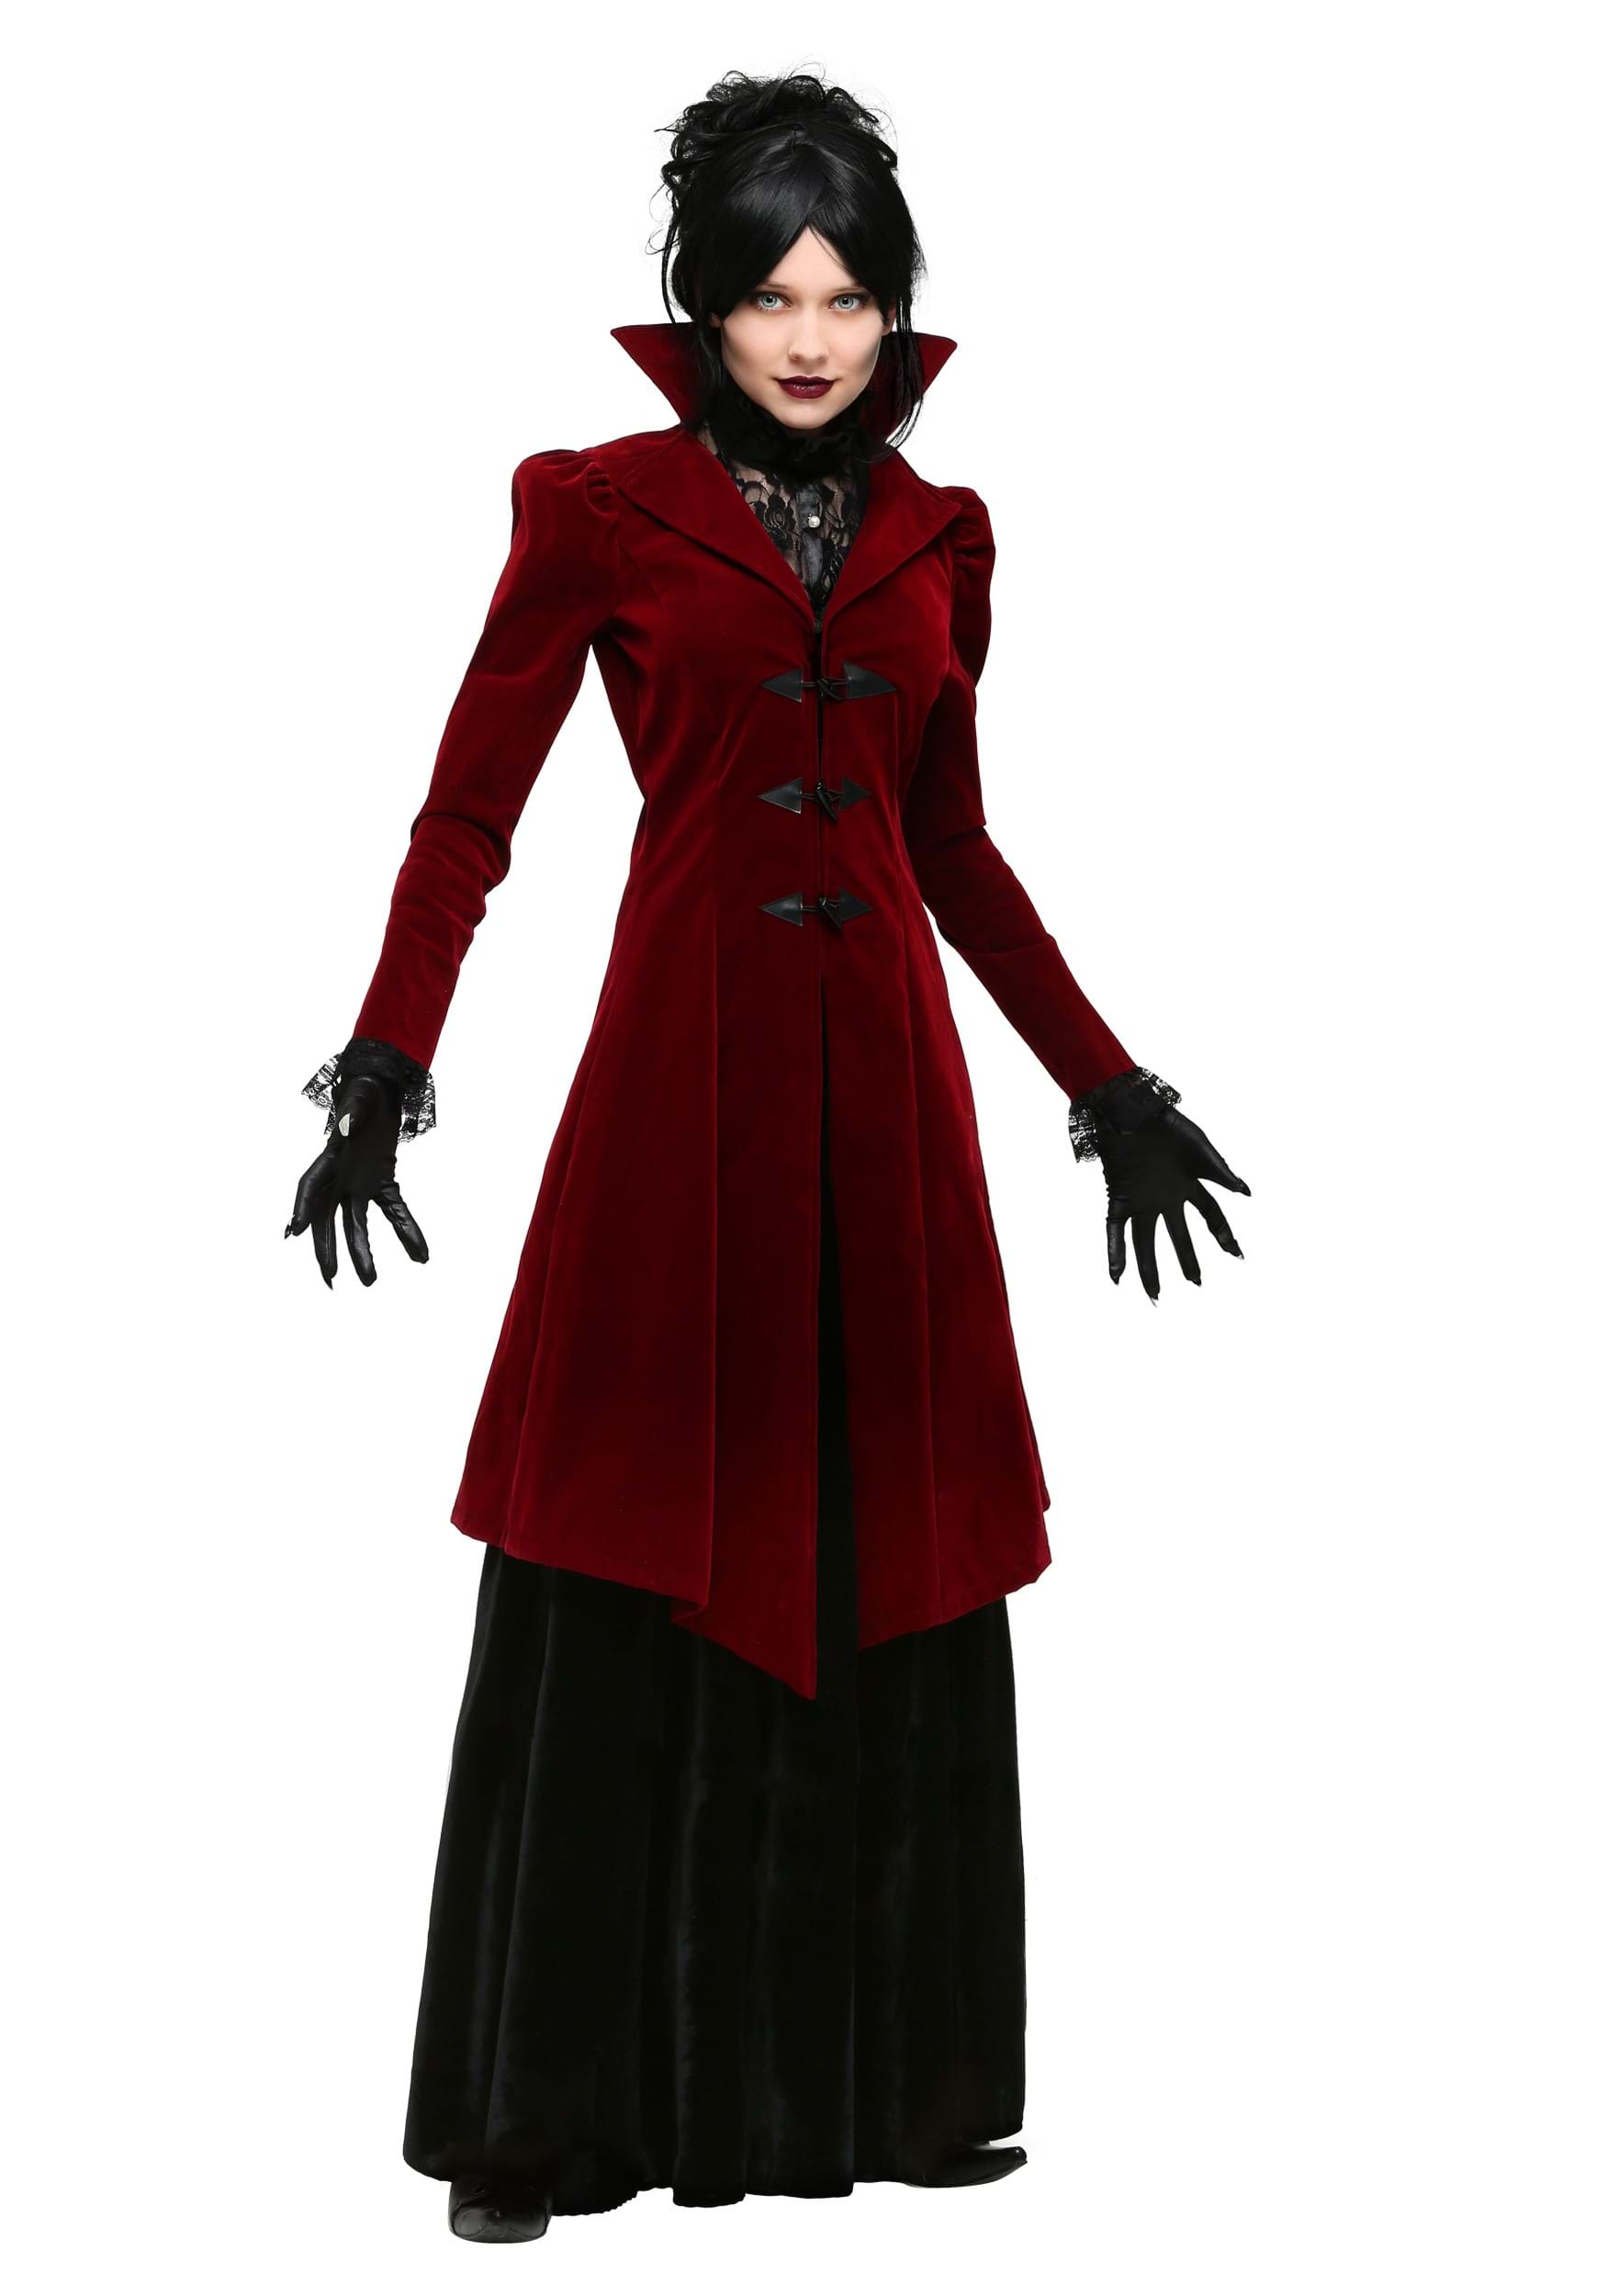 Photos - Fancy Dress FUN Costumes Delightfully Dreadful Vampiress Costume Black/Red FUN1616